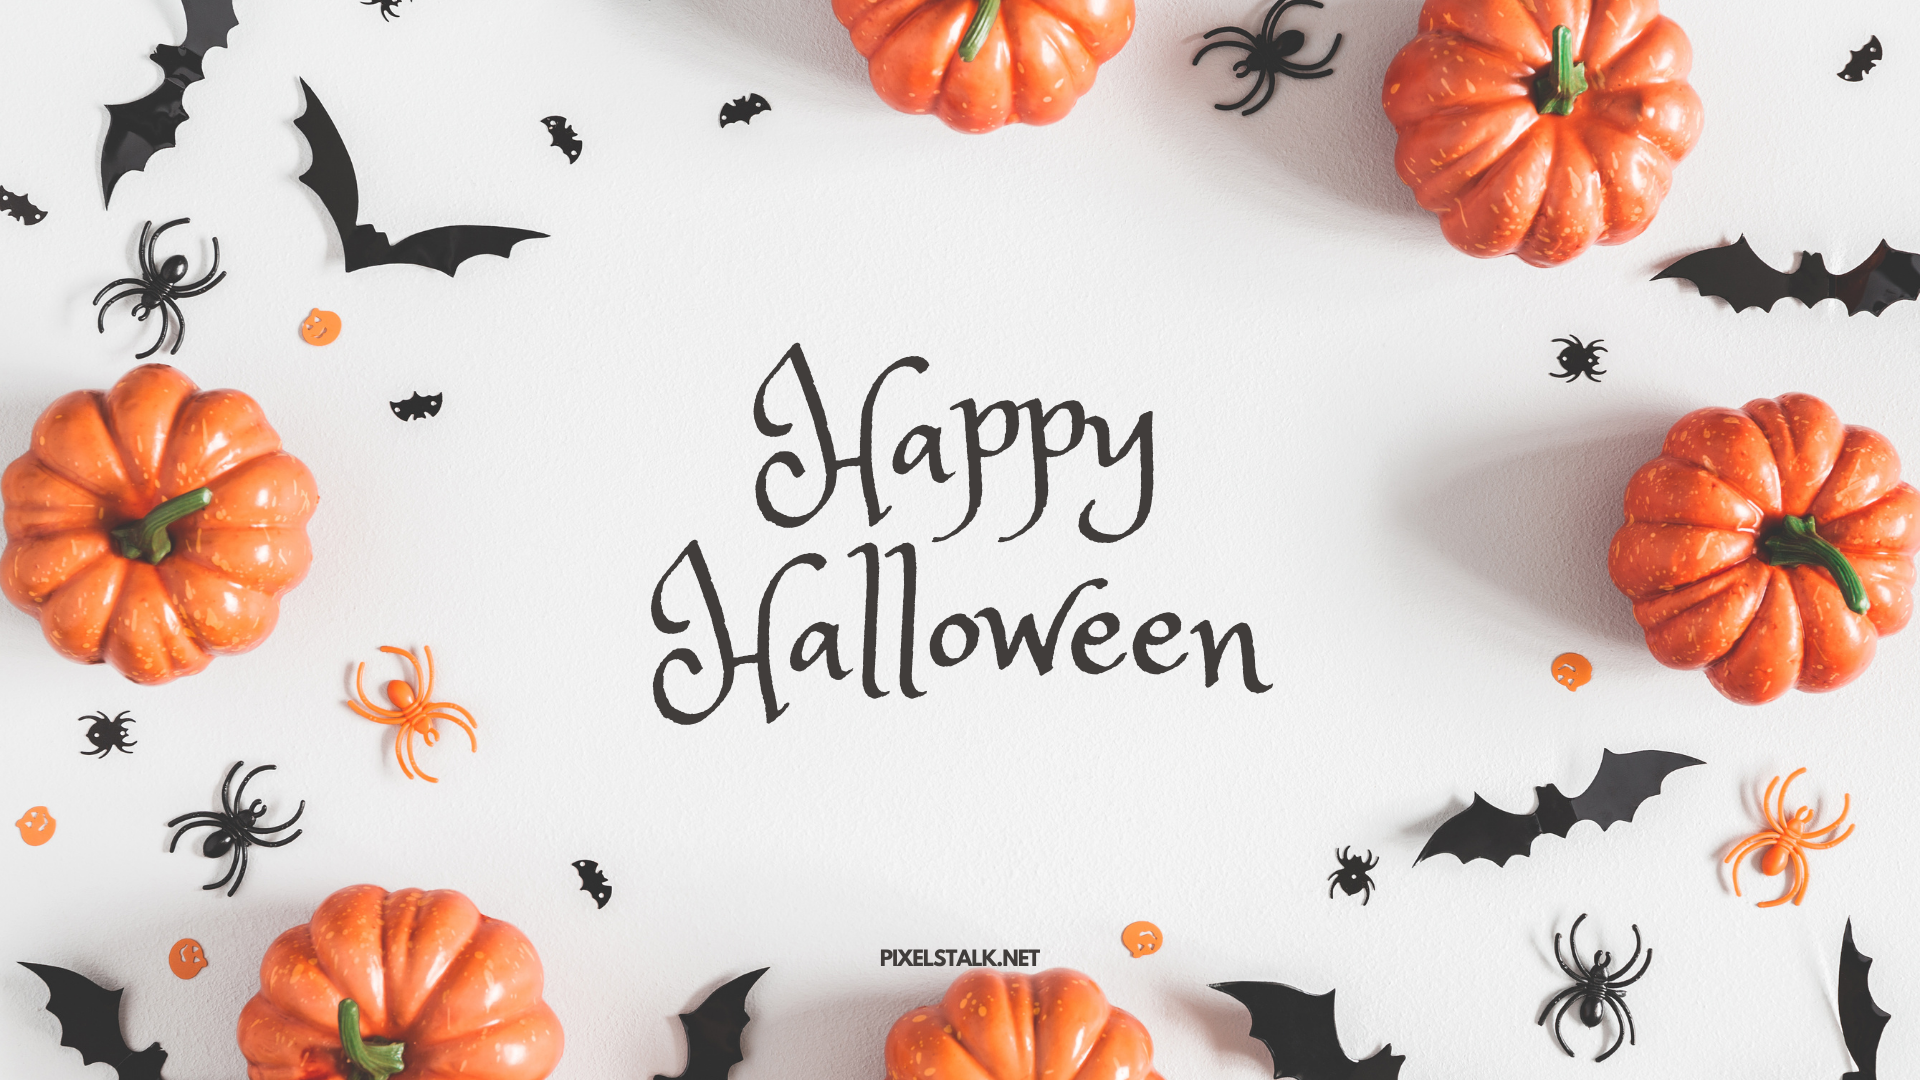 37700 Cute Halloween Background Illustrations RoyaltyFree Vector  Graphics  Clip Art  iStock  Trick or treat Halloween party